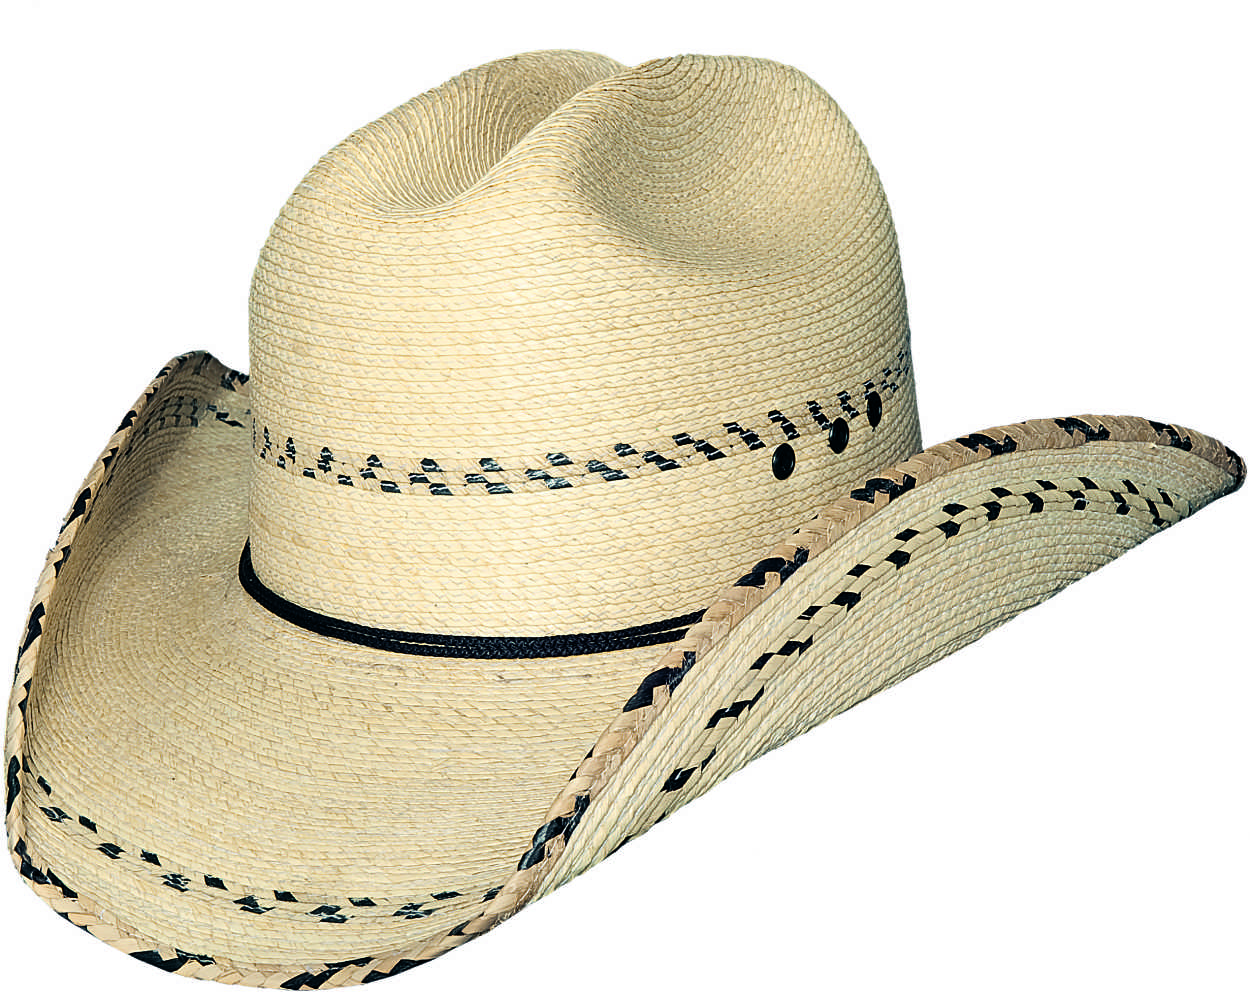 Photos of cowboy hats.